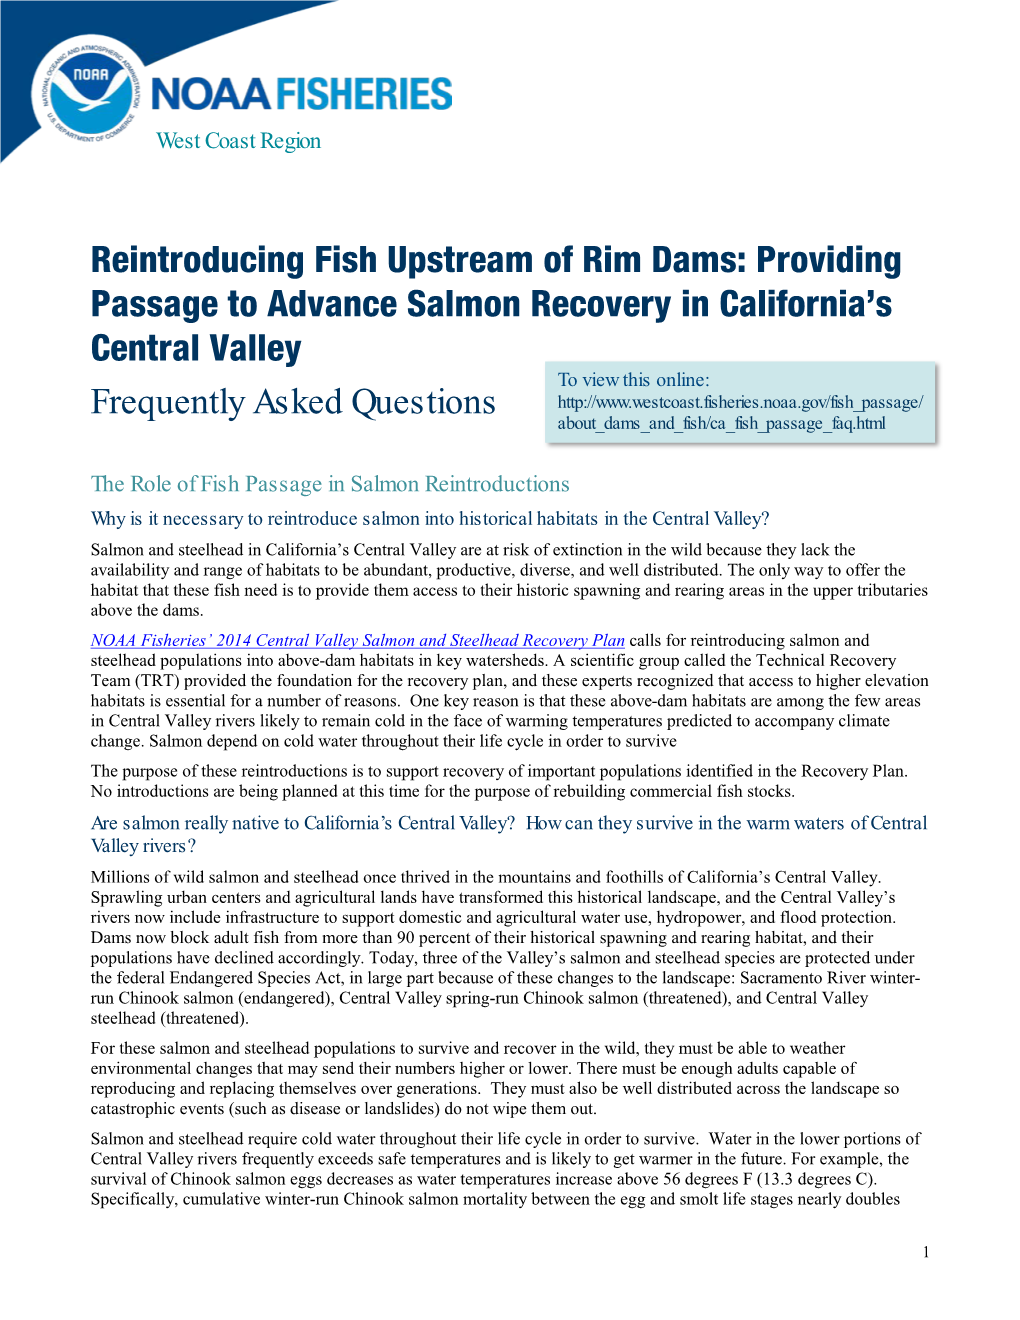 Reintroducing Fish Upstream of Rim Dams: Providing Passage To